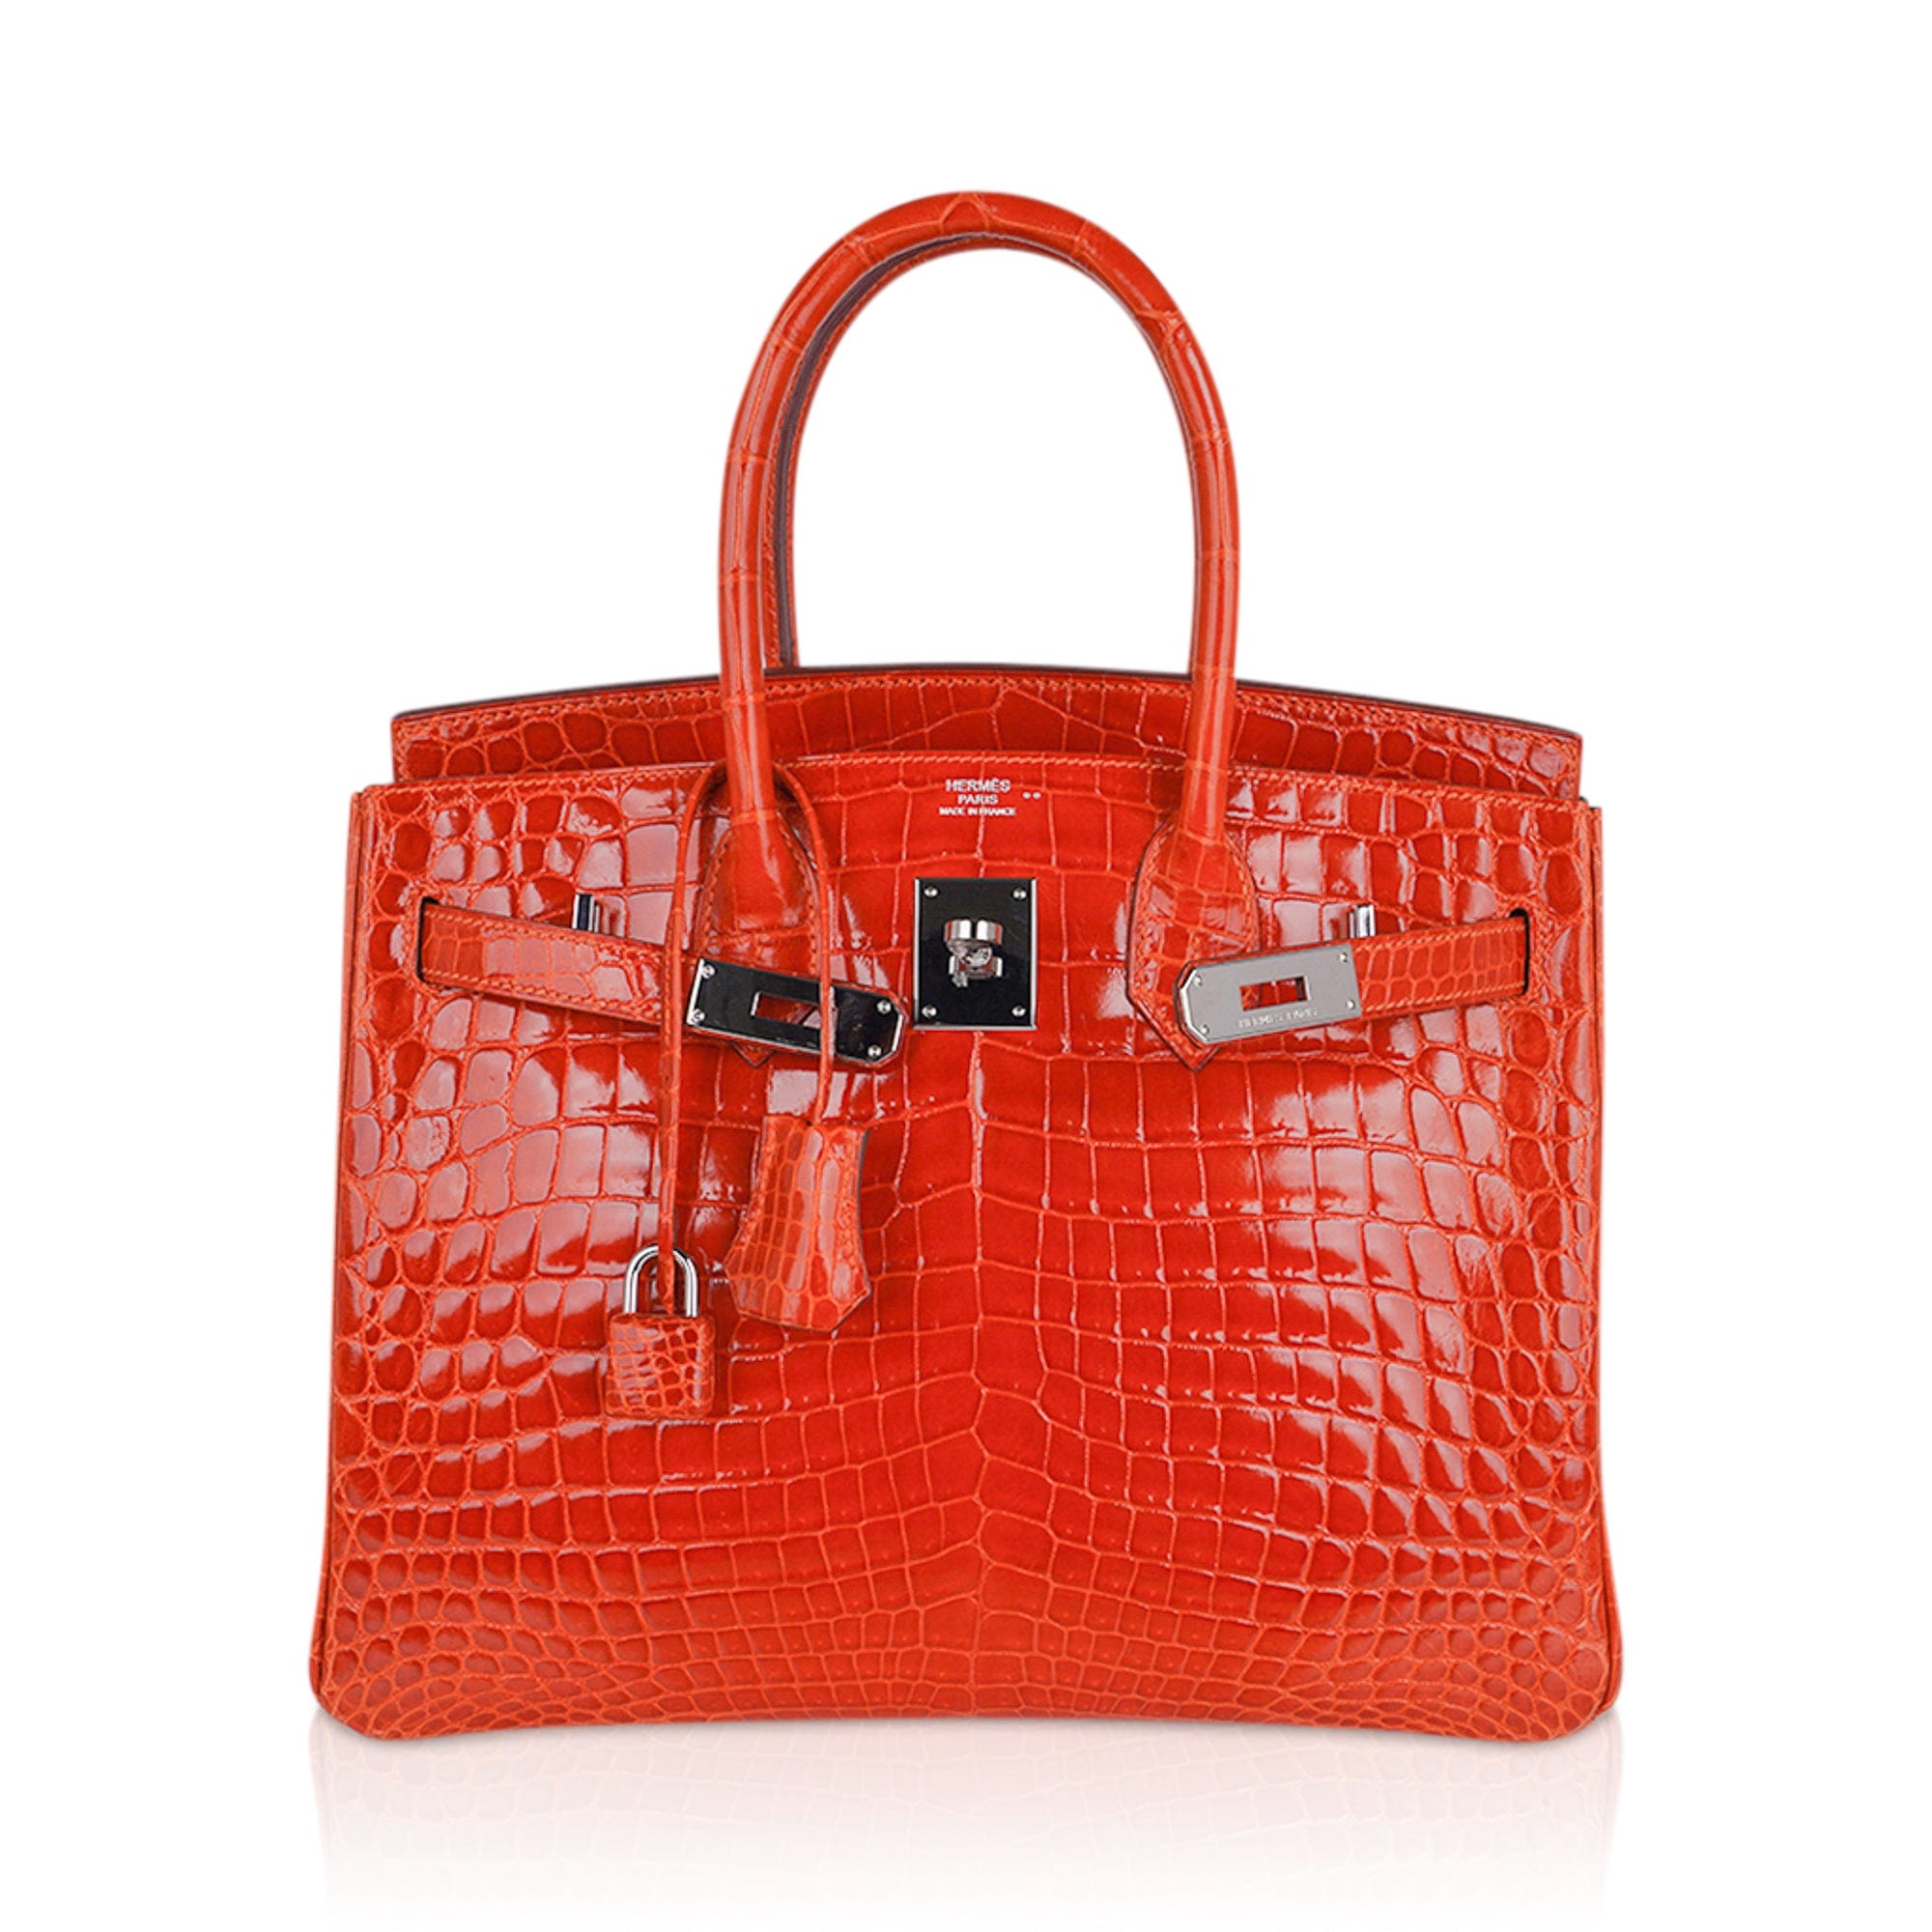 Hermes crocodile skin handbag has record £230,000 price tag